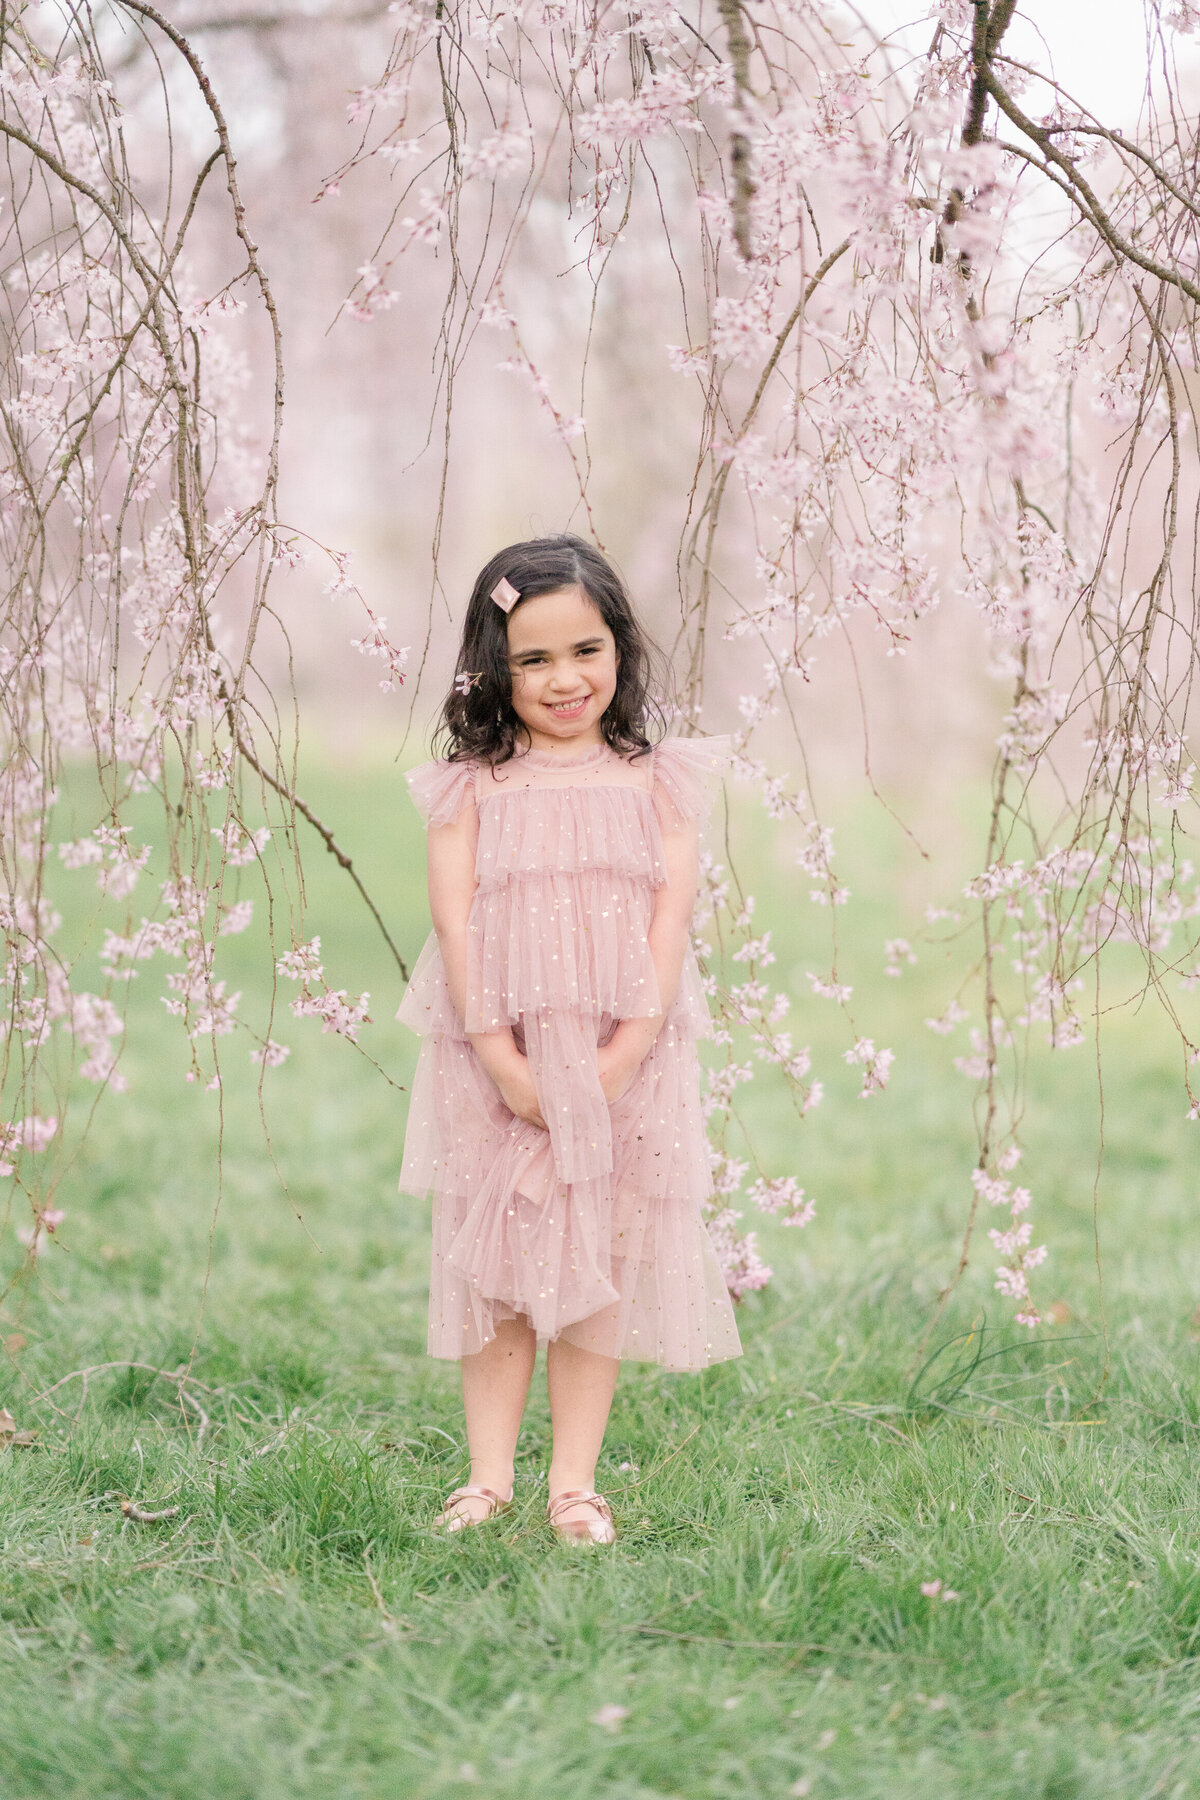 Courtney-Landrum-Photography-Motherhood-Cherry-Blossoms-35